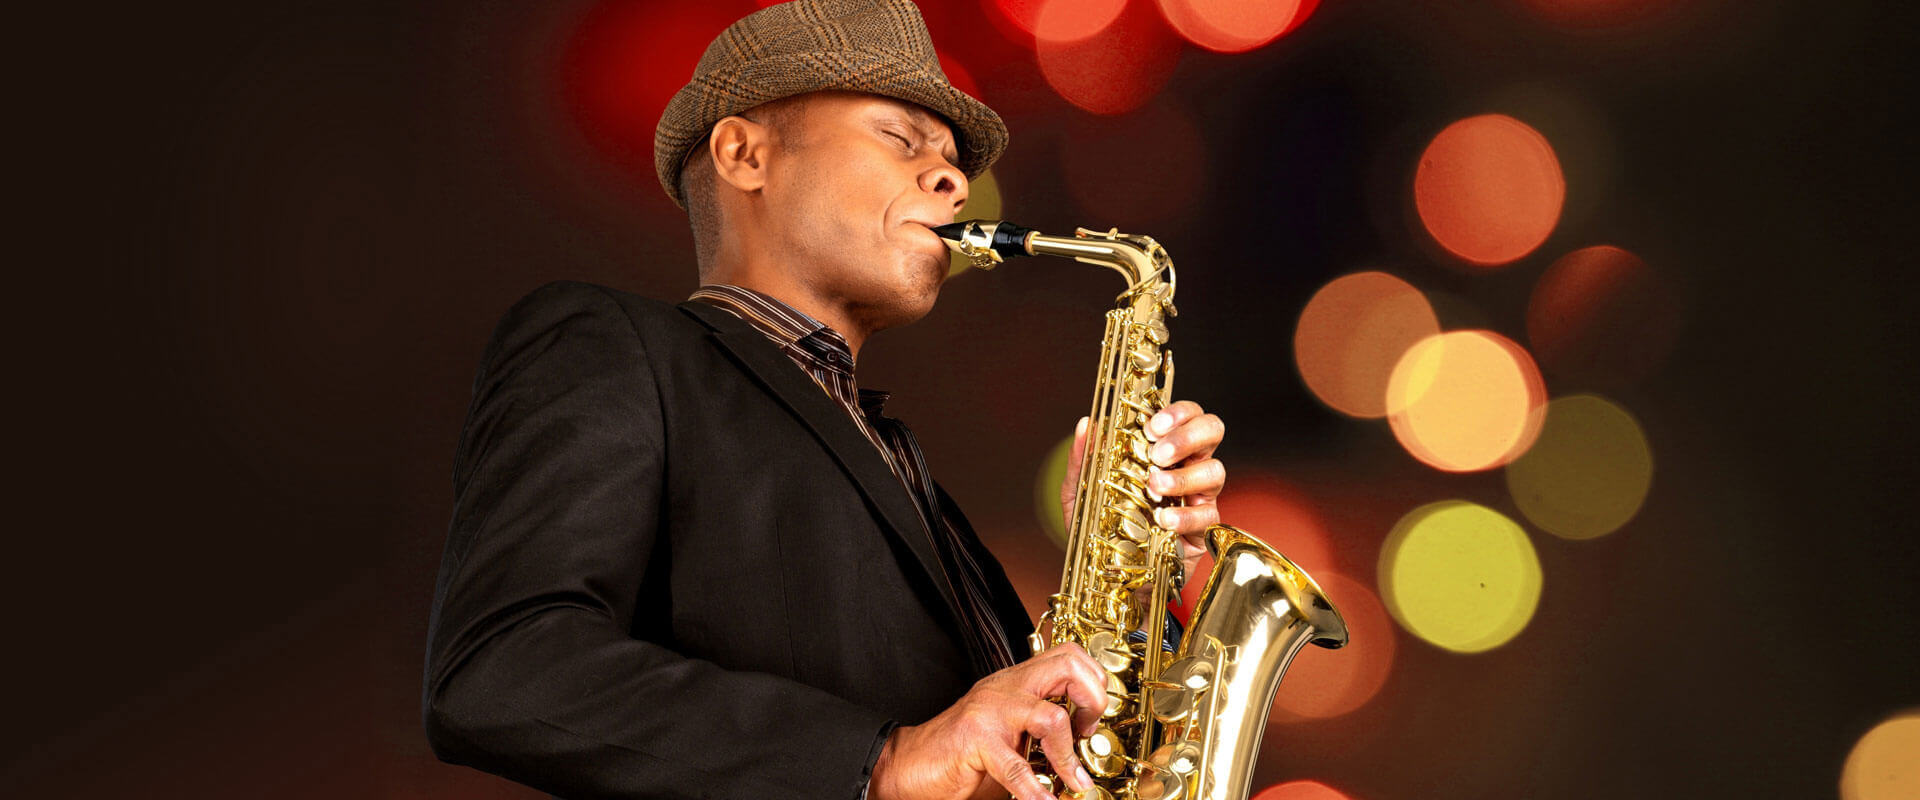 Saxophone Lessons Norfolk, CT